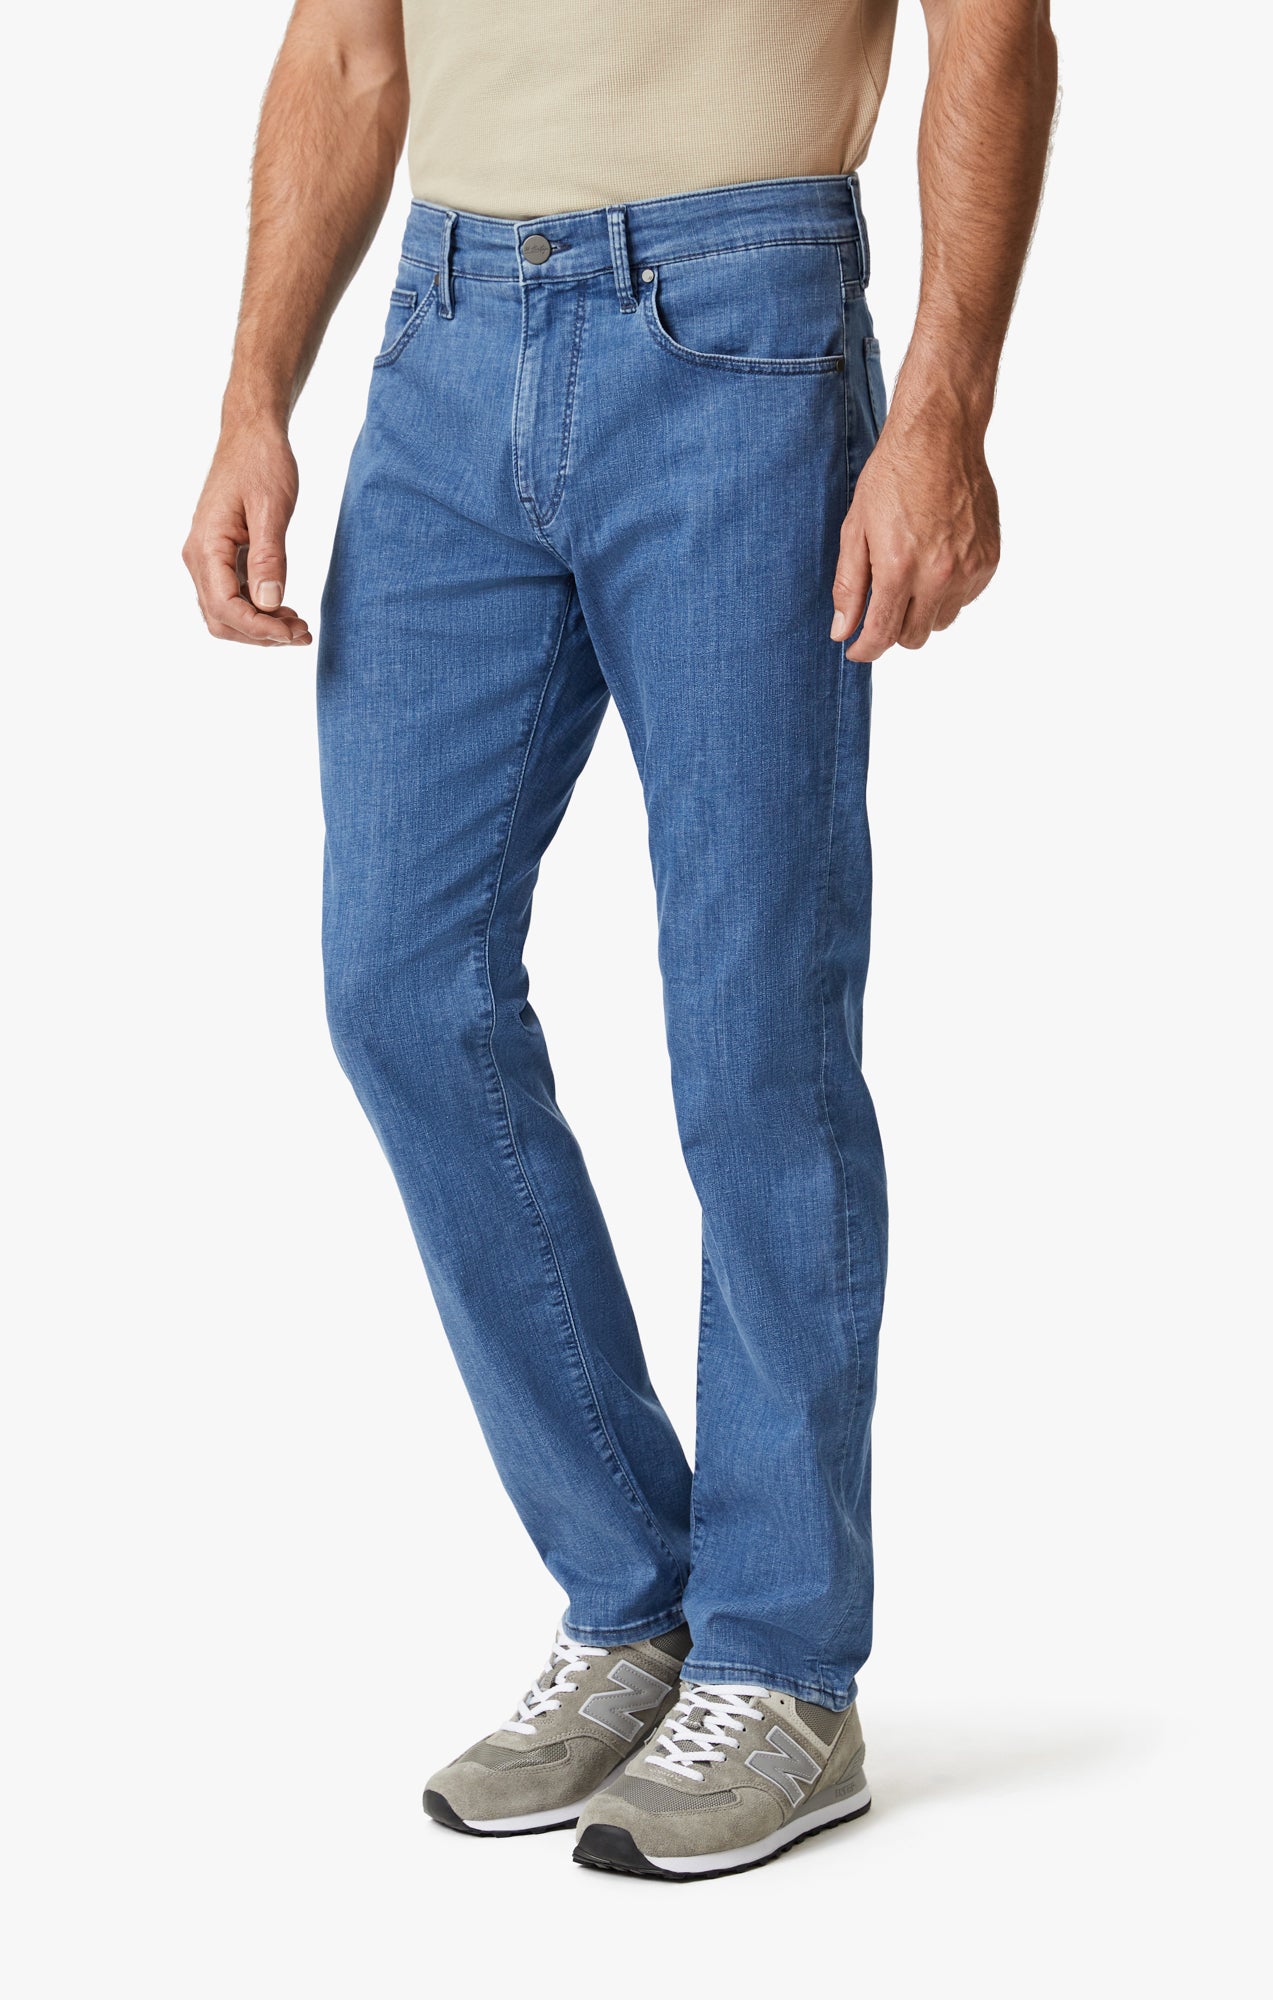 Men's Luxe Performance Jeans - Denim for Men | 7 For All Mankind